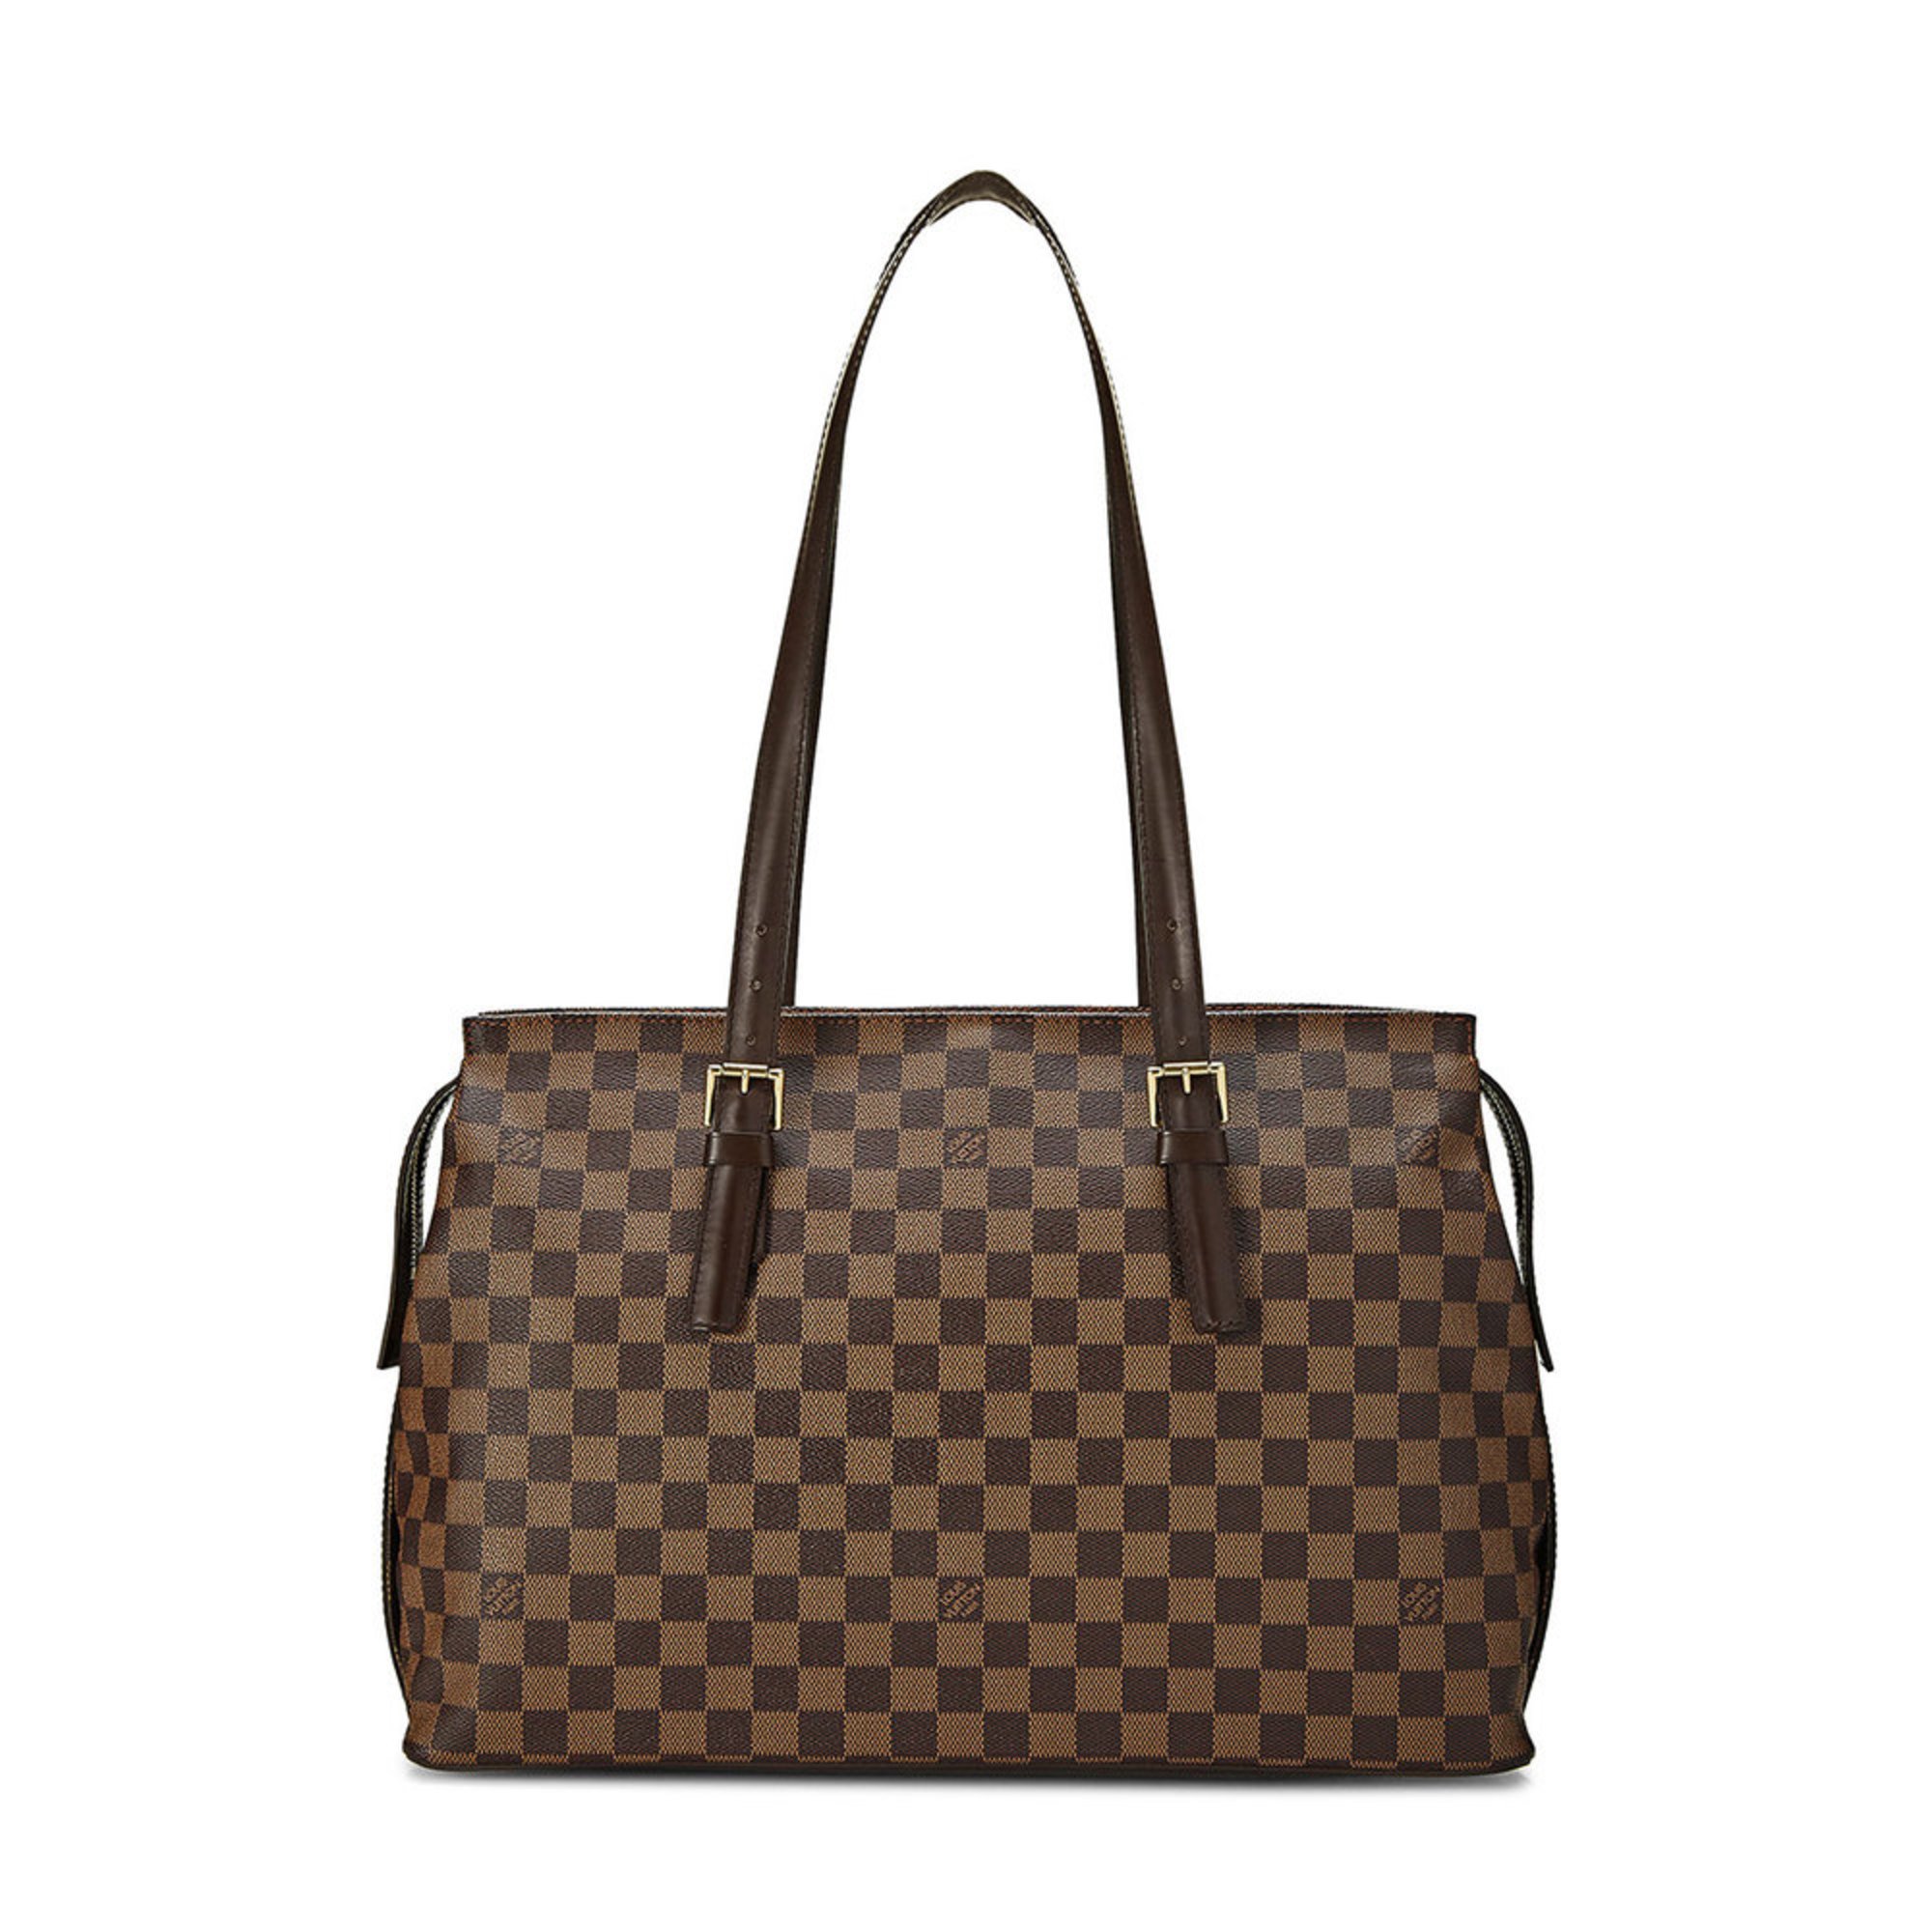 Louis Vuitton Damier Ebe Chelsea | Handbags | Accessories - Shop Your Navy Exchange - Official Site